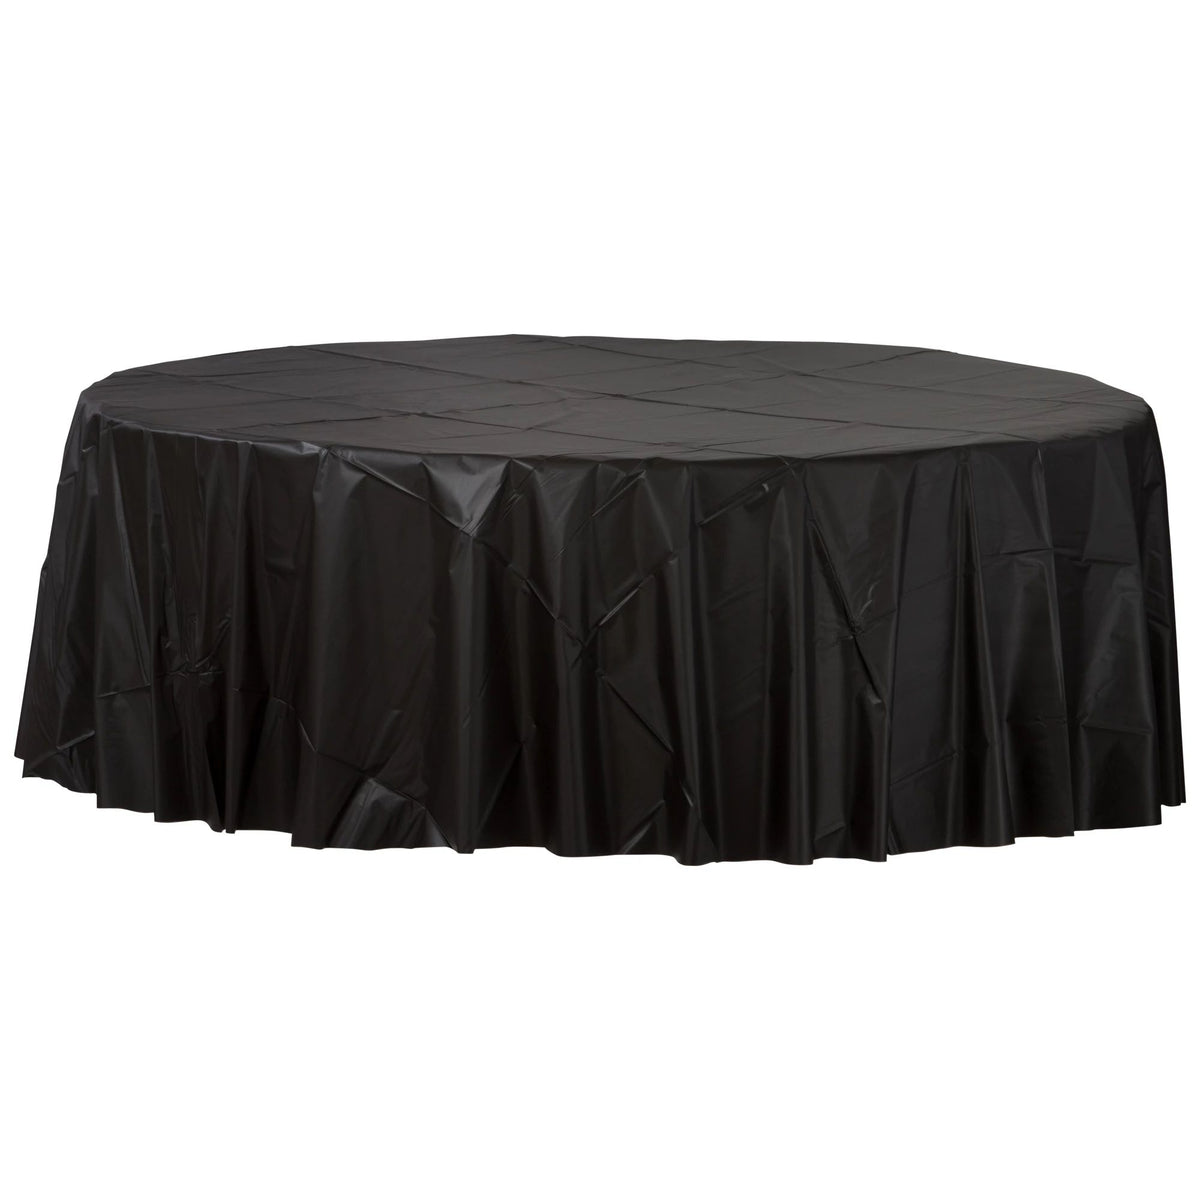 Black 84" Round Plastic Table Cover